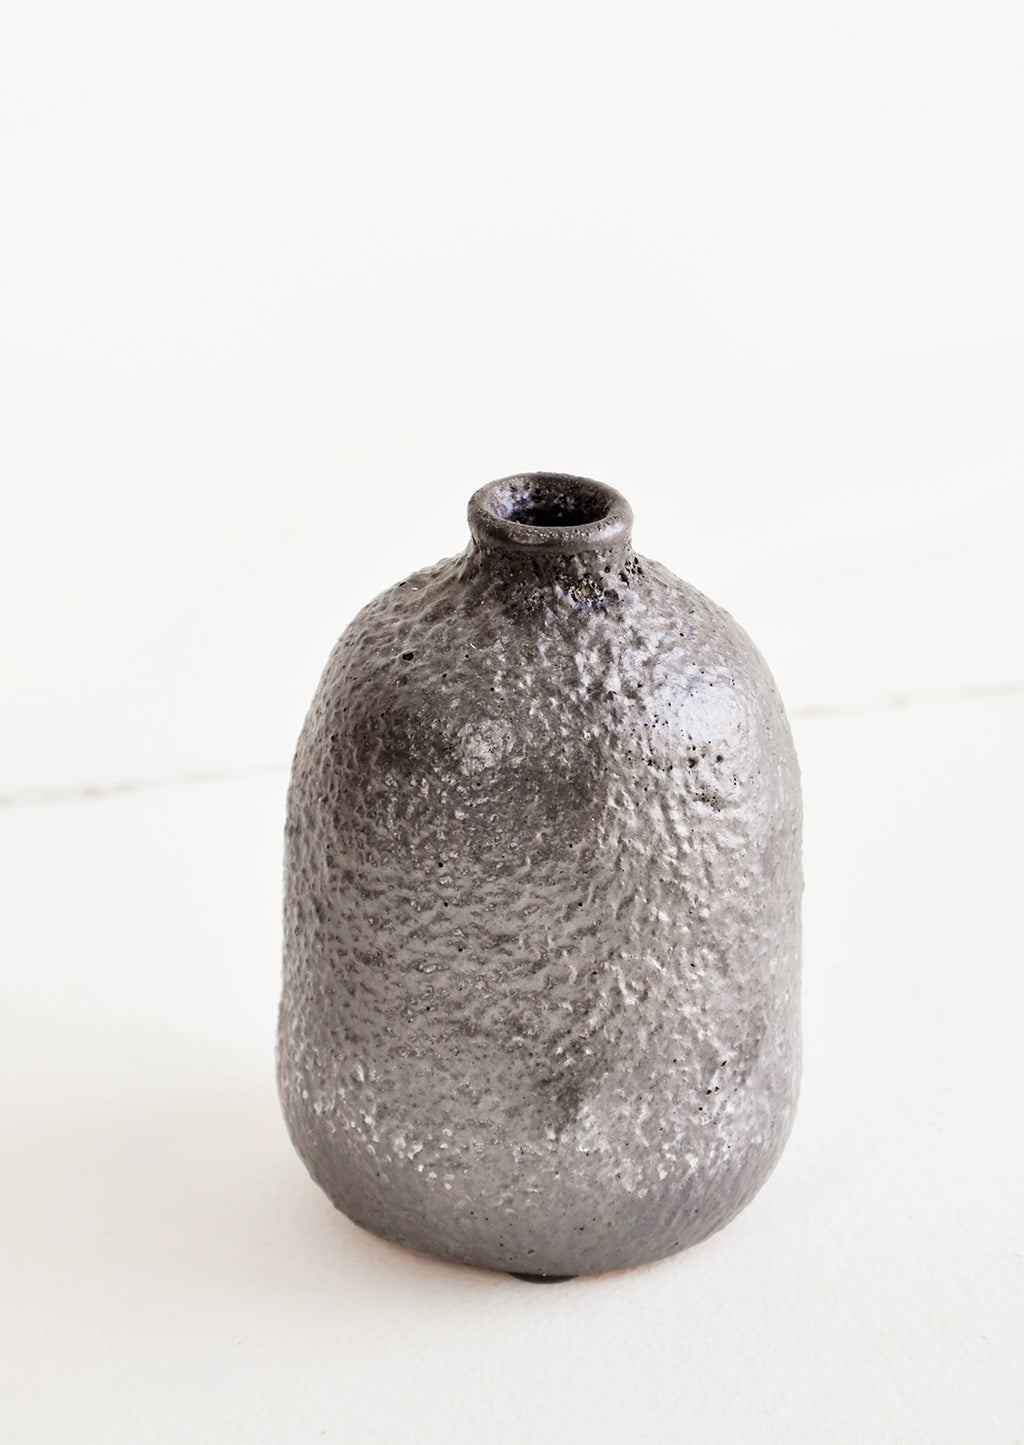 Medium / Mercury: Heavily textured, midsize ceramic bud vase in a metallic, crater-like dark grey glaze - LEIF